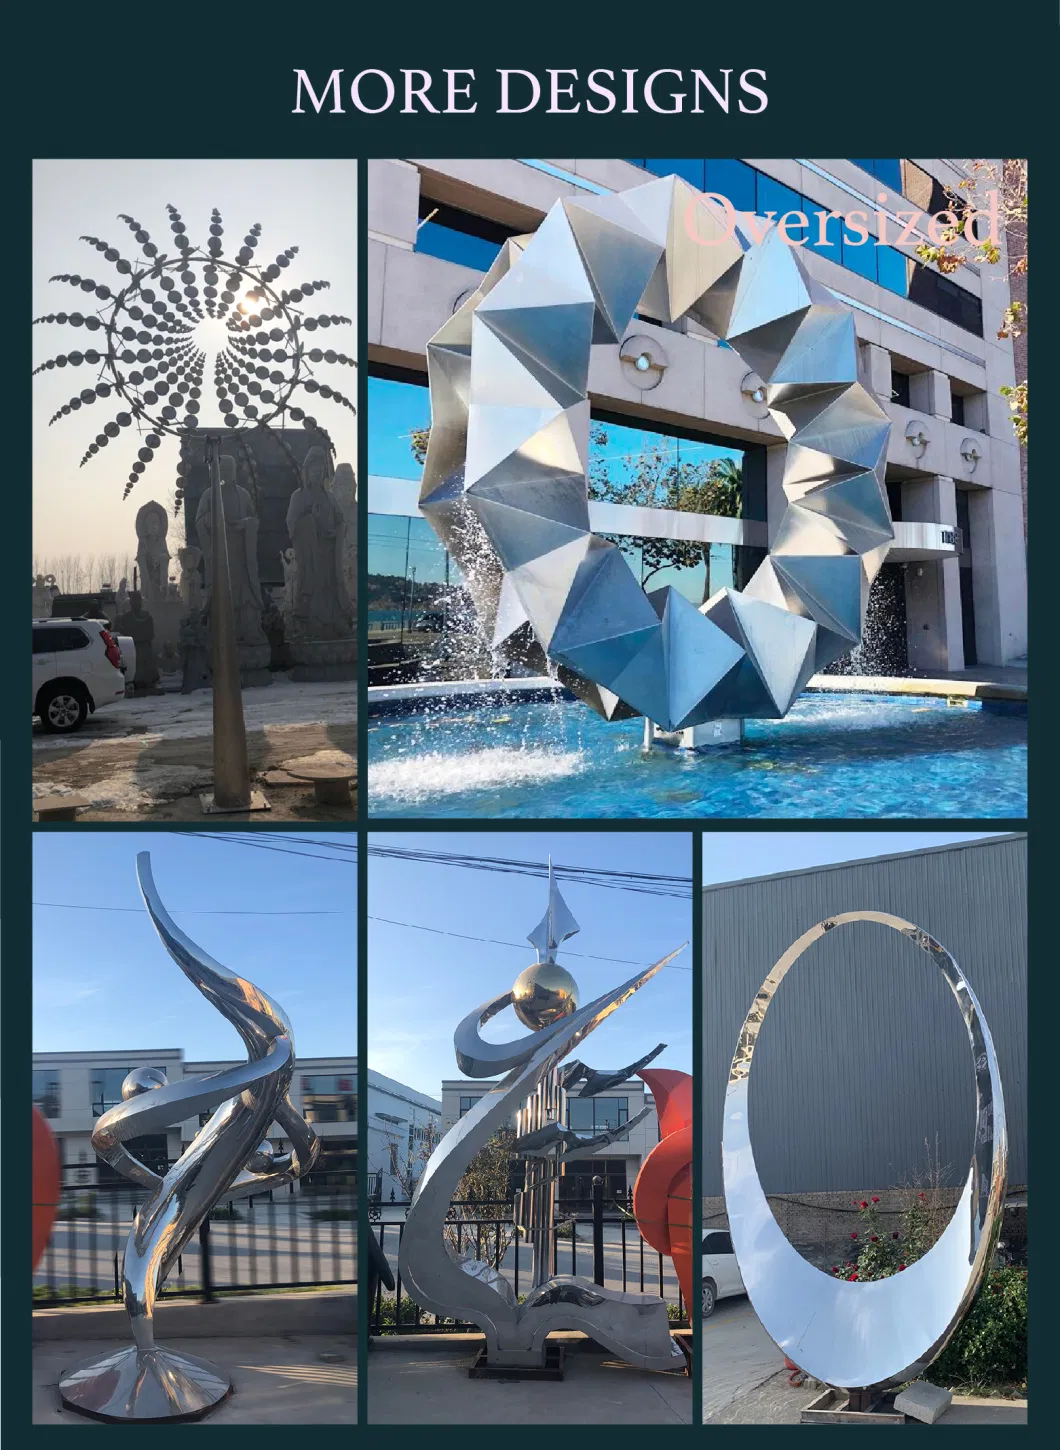 Blve Large Outdoor Art Mirror Polishing Metal Ball Statue Stainless Steel Garden Sphere Sculpture